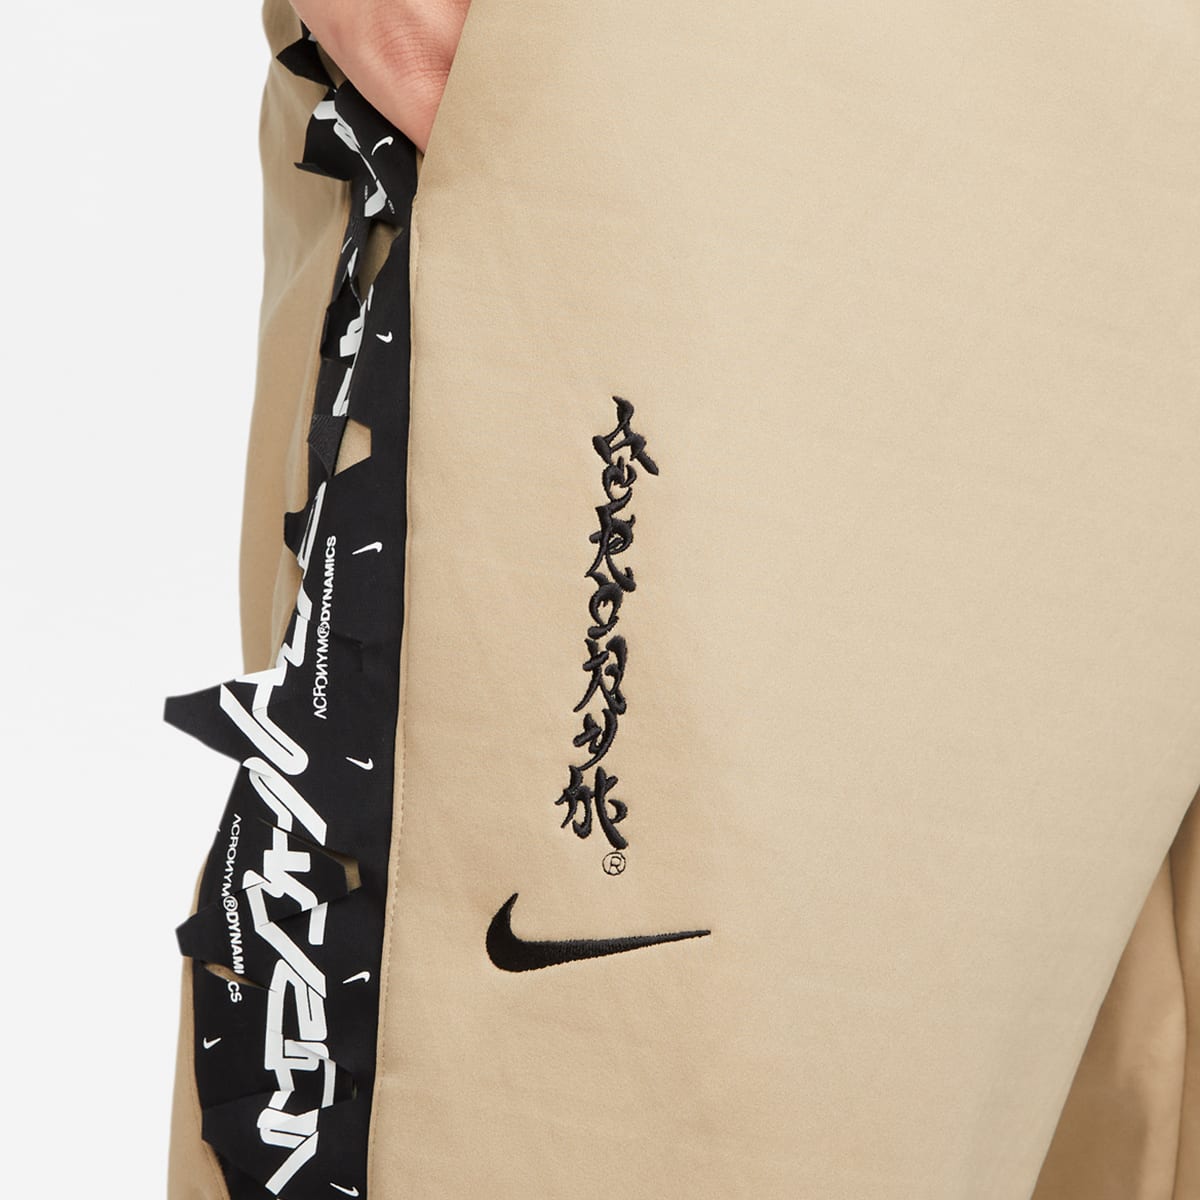 Nike x Acronym Knit Pant (Khaki & Black) | END. Launches